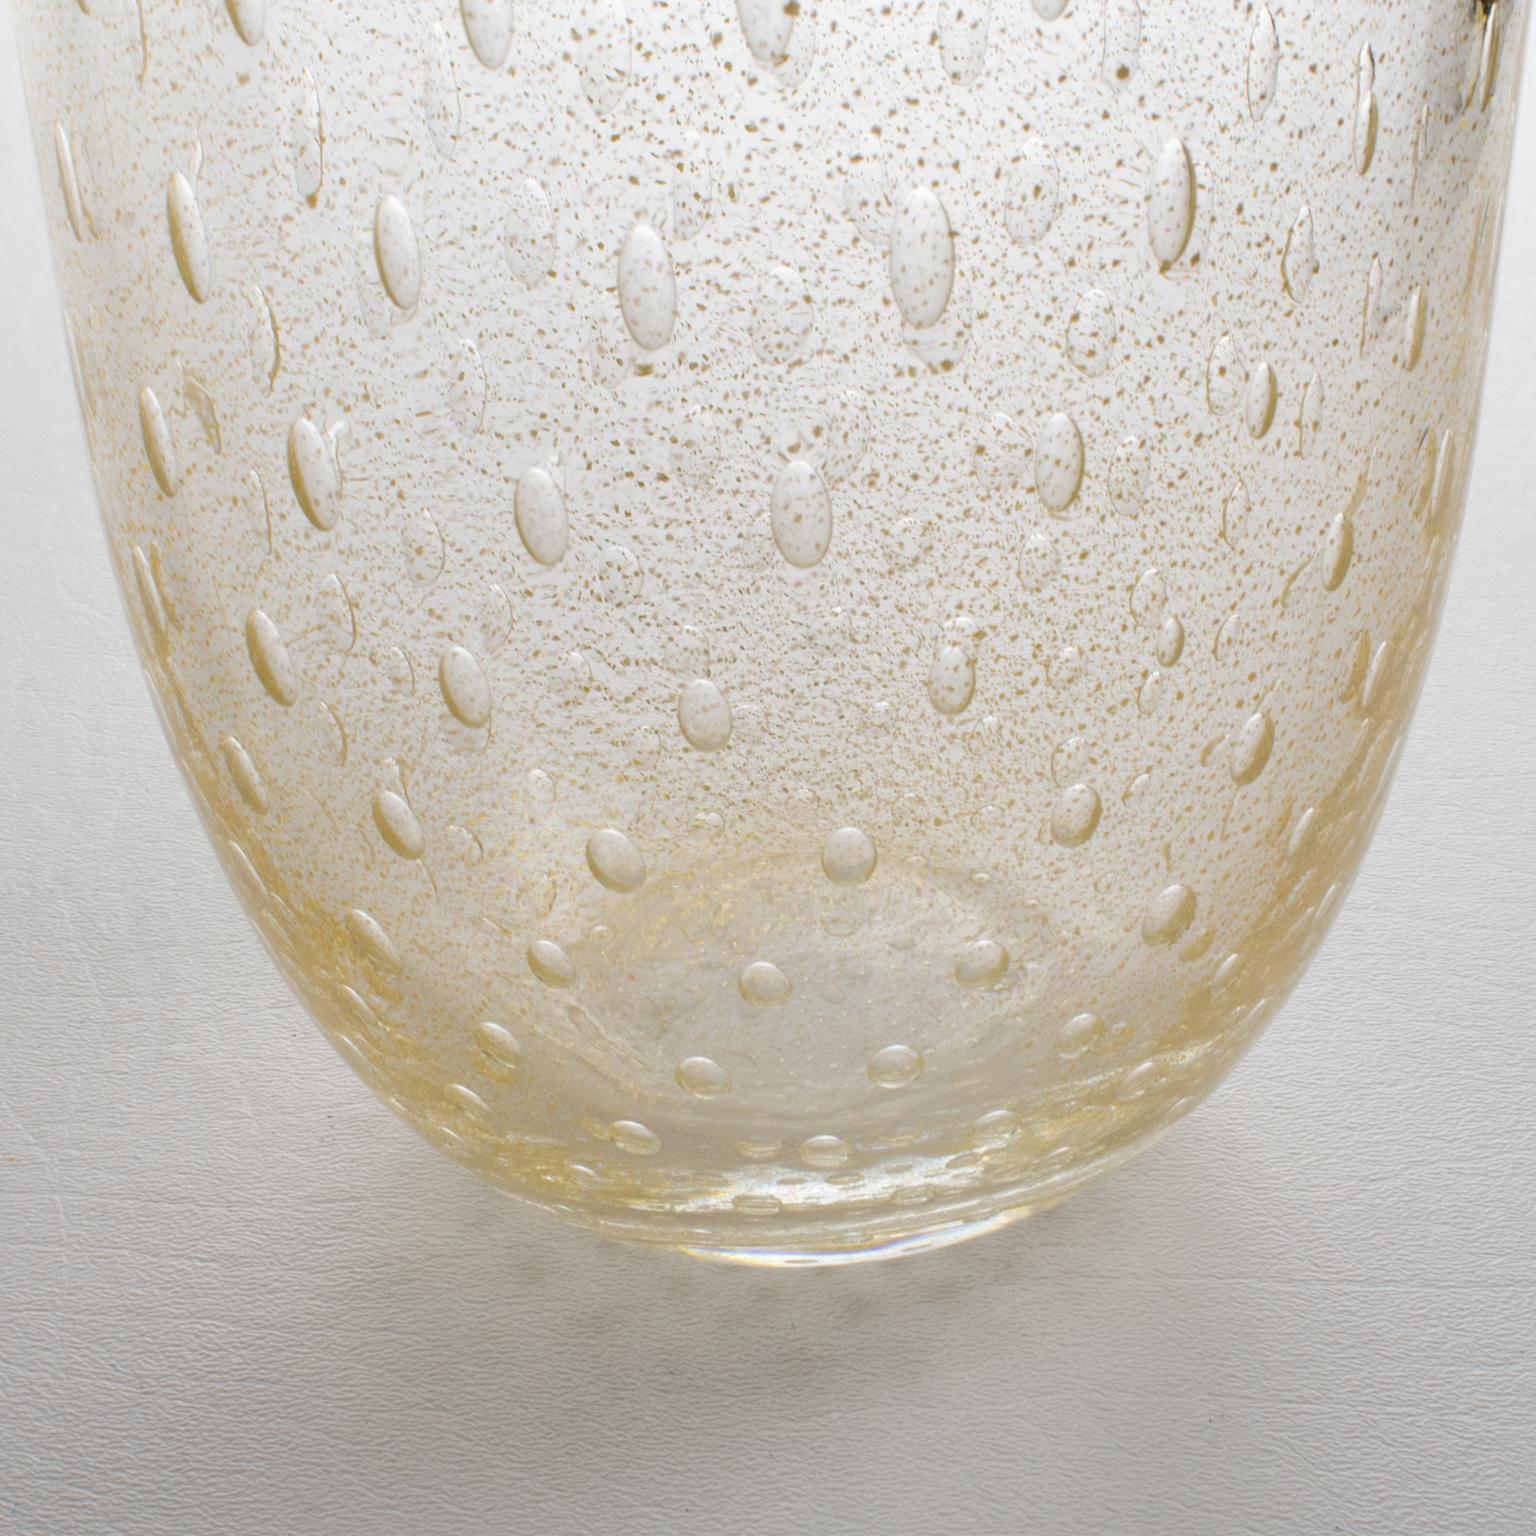 Modern Italian Art Glass Murano Vase Gold Flakes and Bubbles by Gambaro & Poggi For Sale